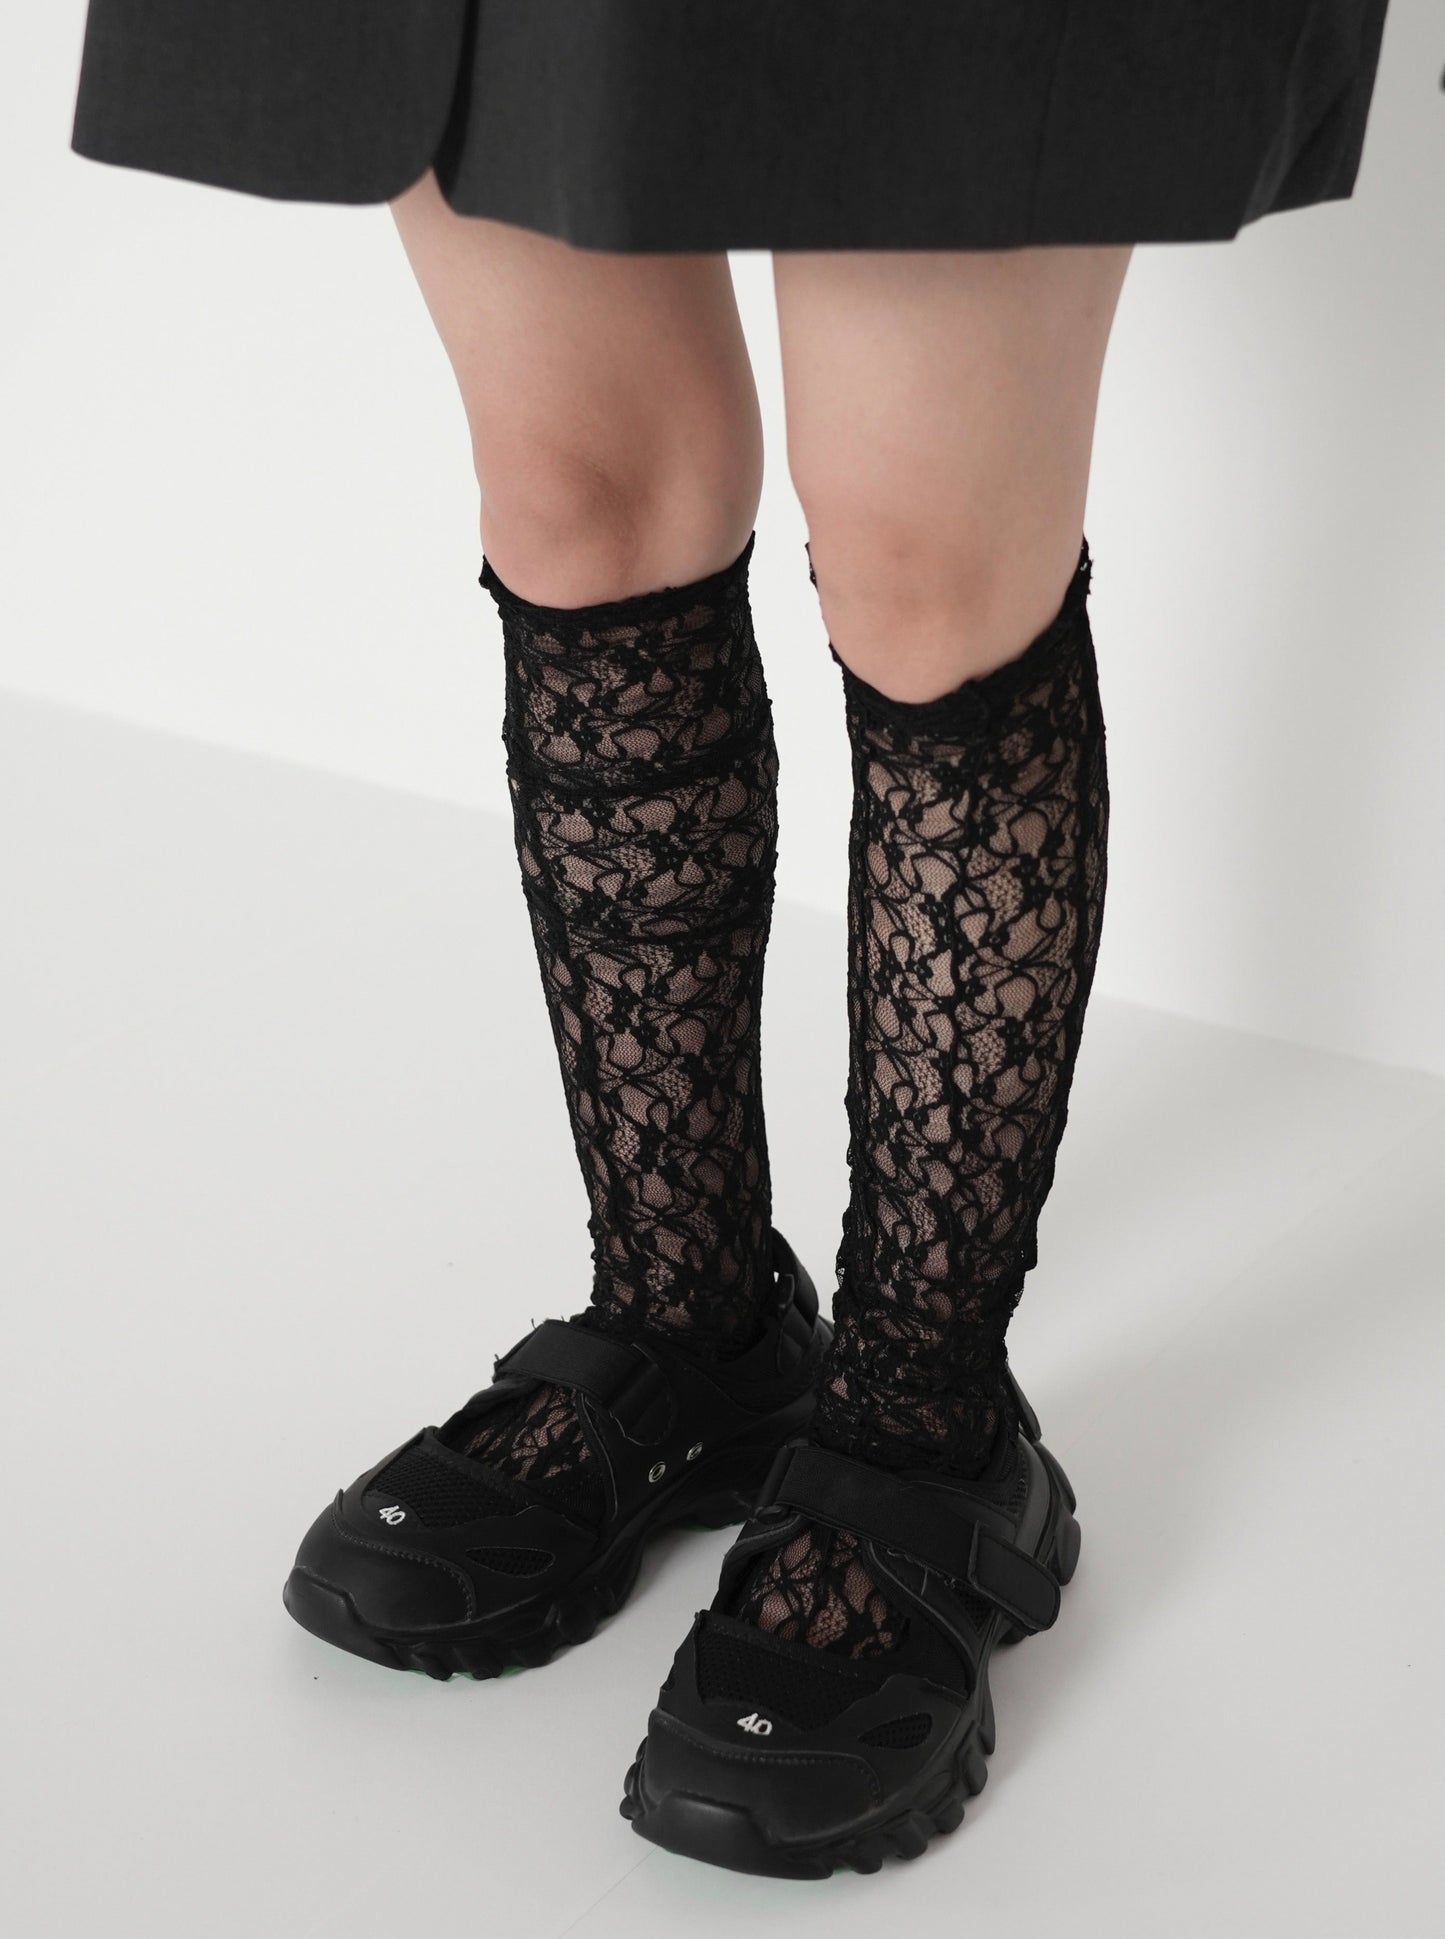 lace high socks